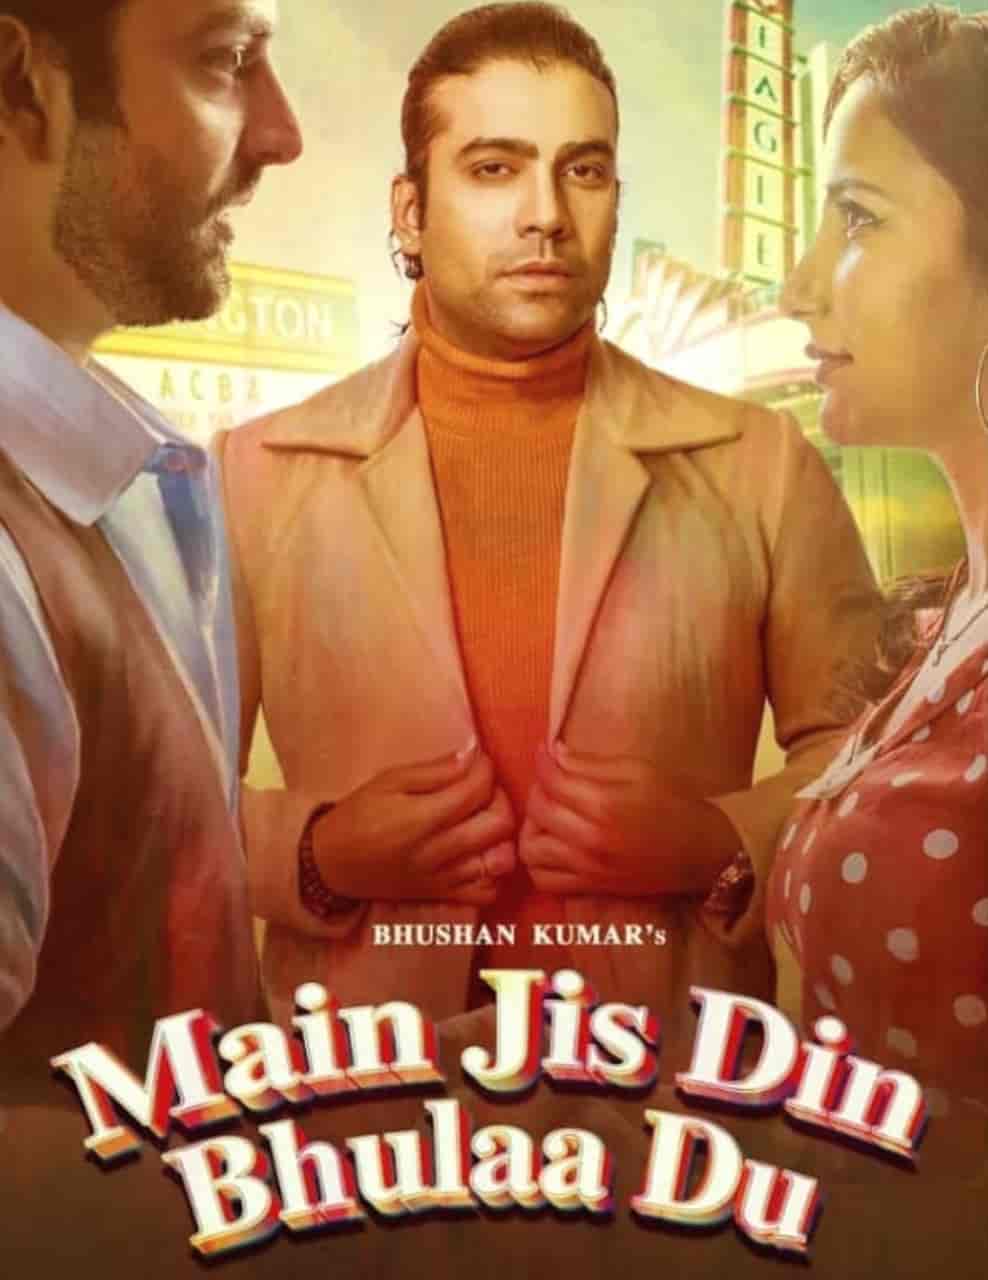 Main Jis Din Bhulaa Du Hindi Song Image Features Jubin Nautiyal